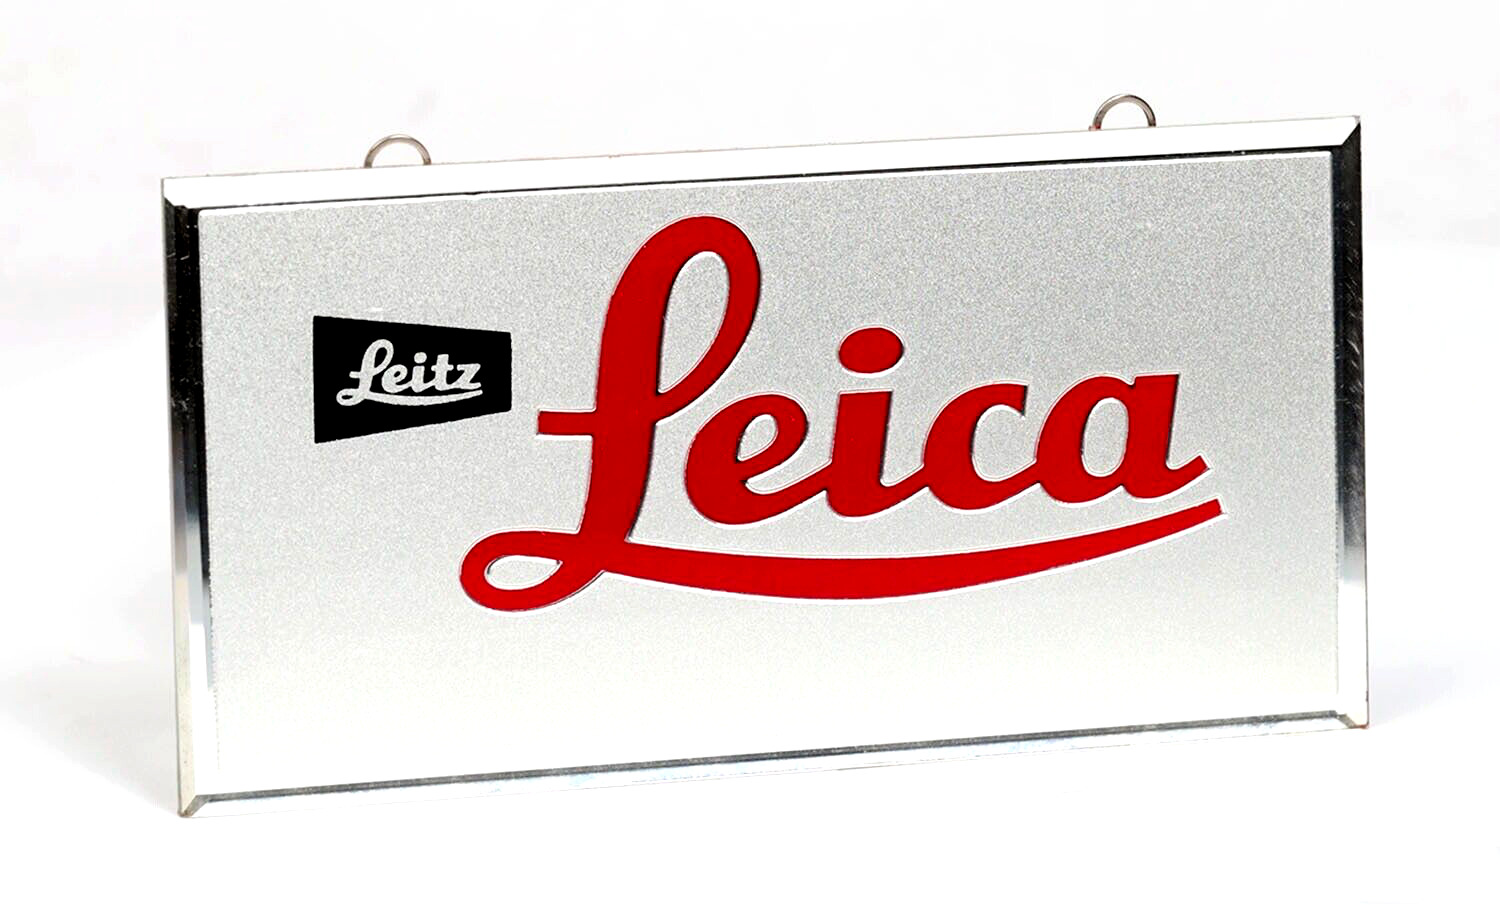 Leitz LEICA GLASS DISPLAY SIGN - VINTAGE NOS - UNUSED - BEAUTIFUL & VERY RARE #2